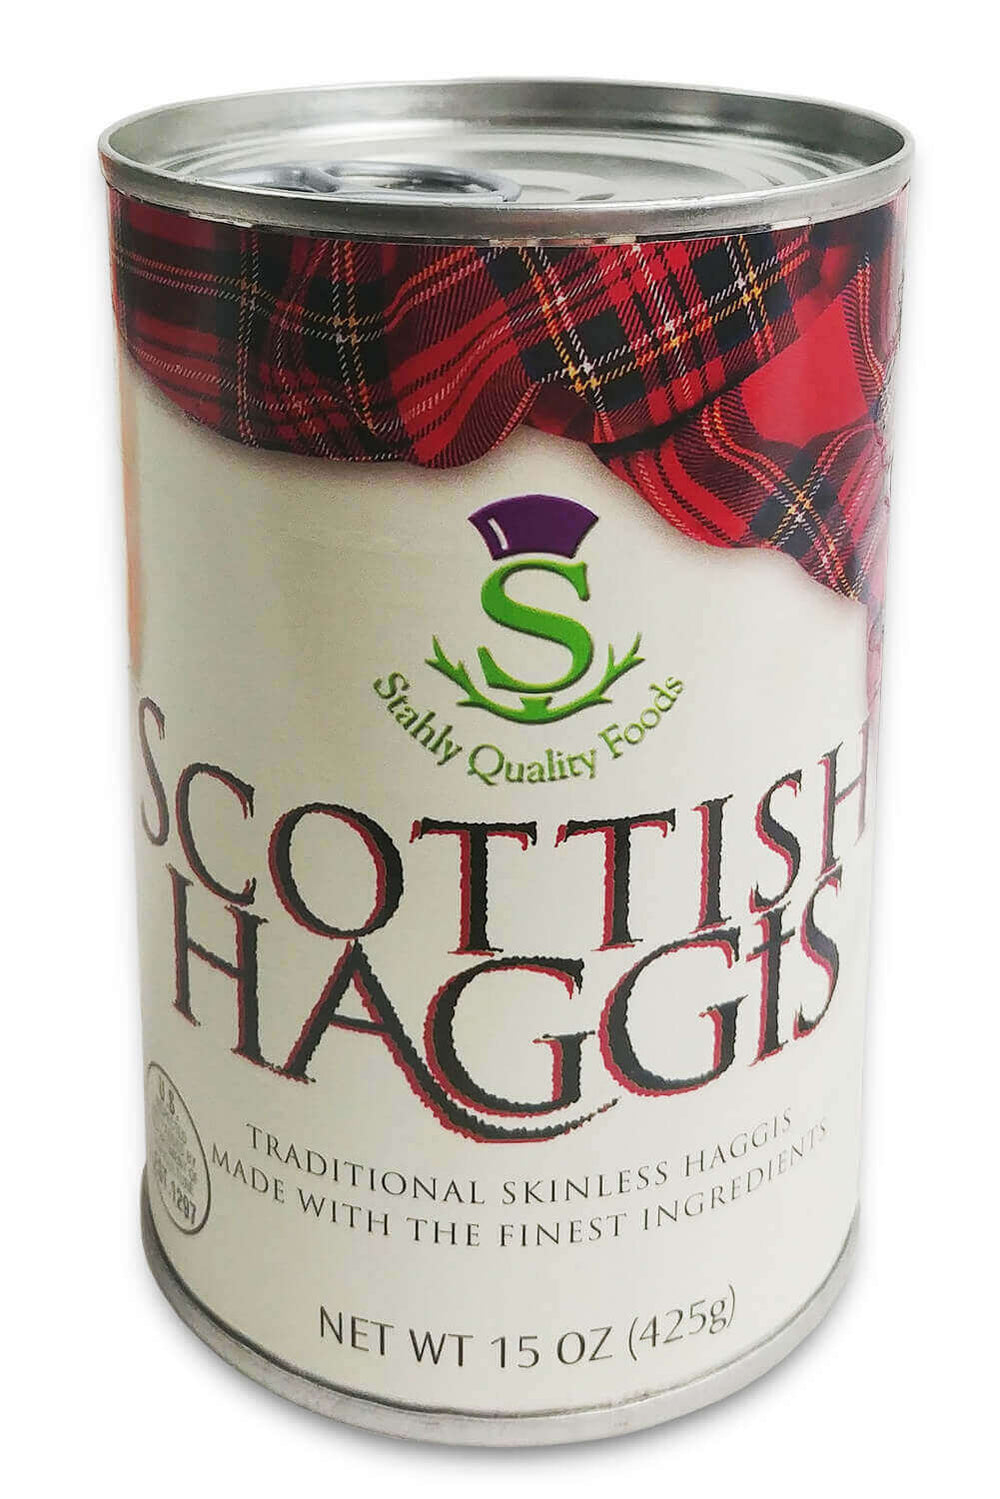 Stahly Scottish Canned Haggis